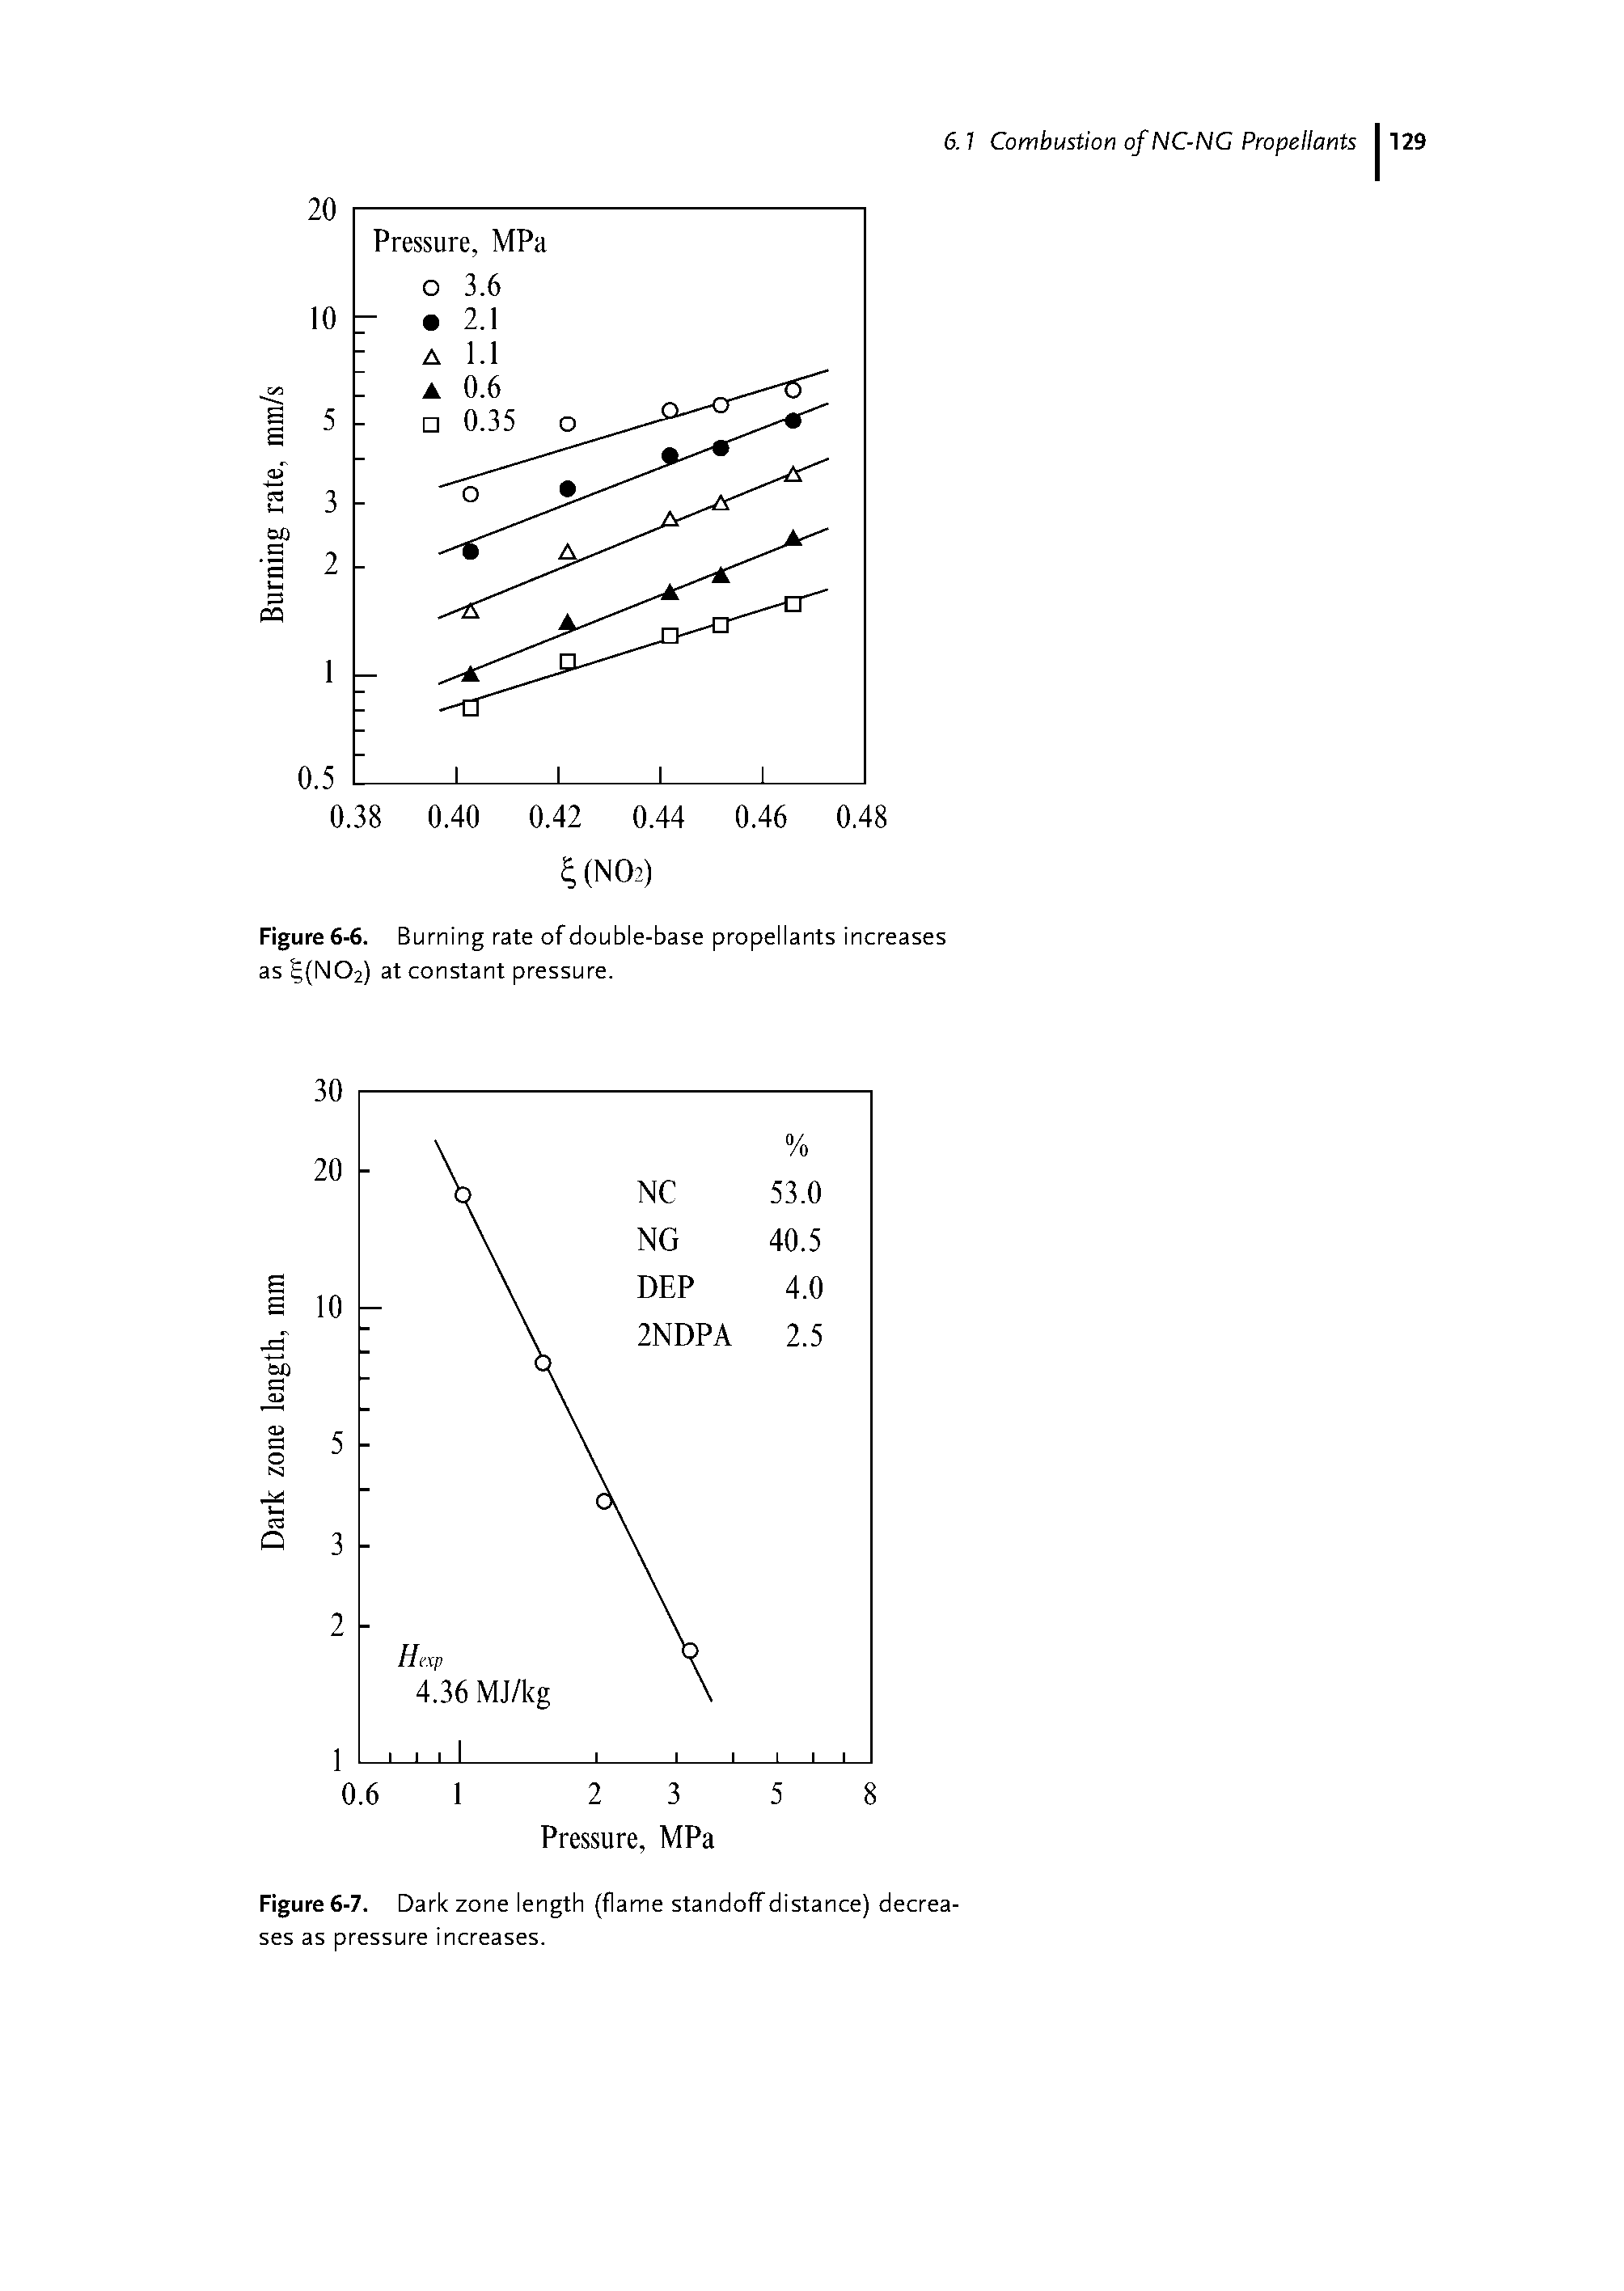 Figure 6-7. Dark zone length (flame standoff distance) decreases as pressure increases.